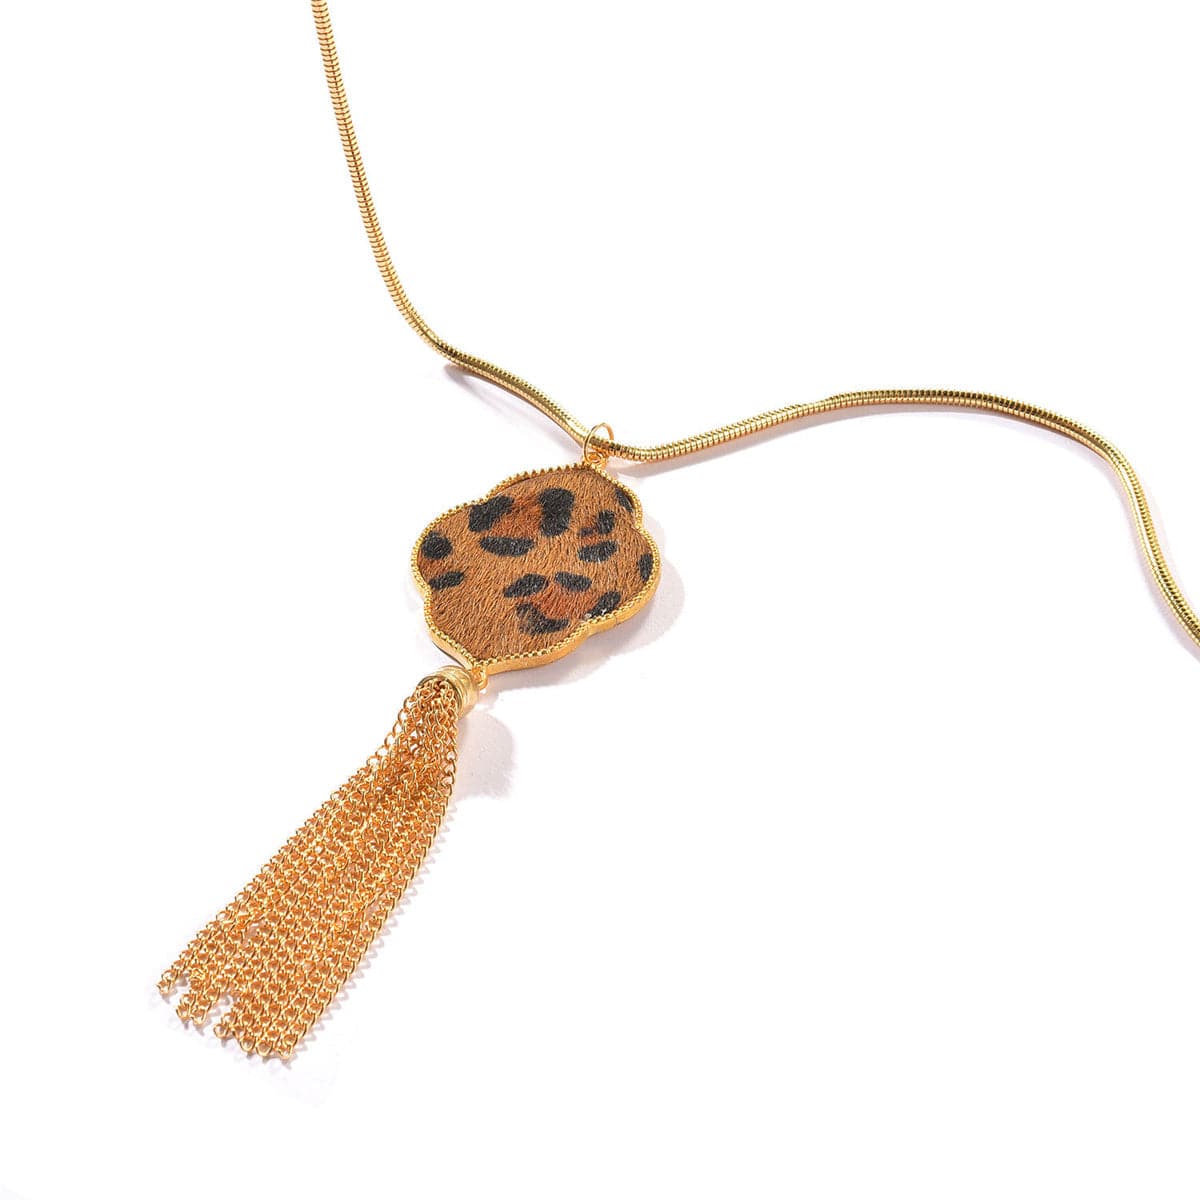 Tan Polyurethane & 18K Gold-Plated Leopard Lattice Tassel Pendant Necklace